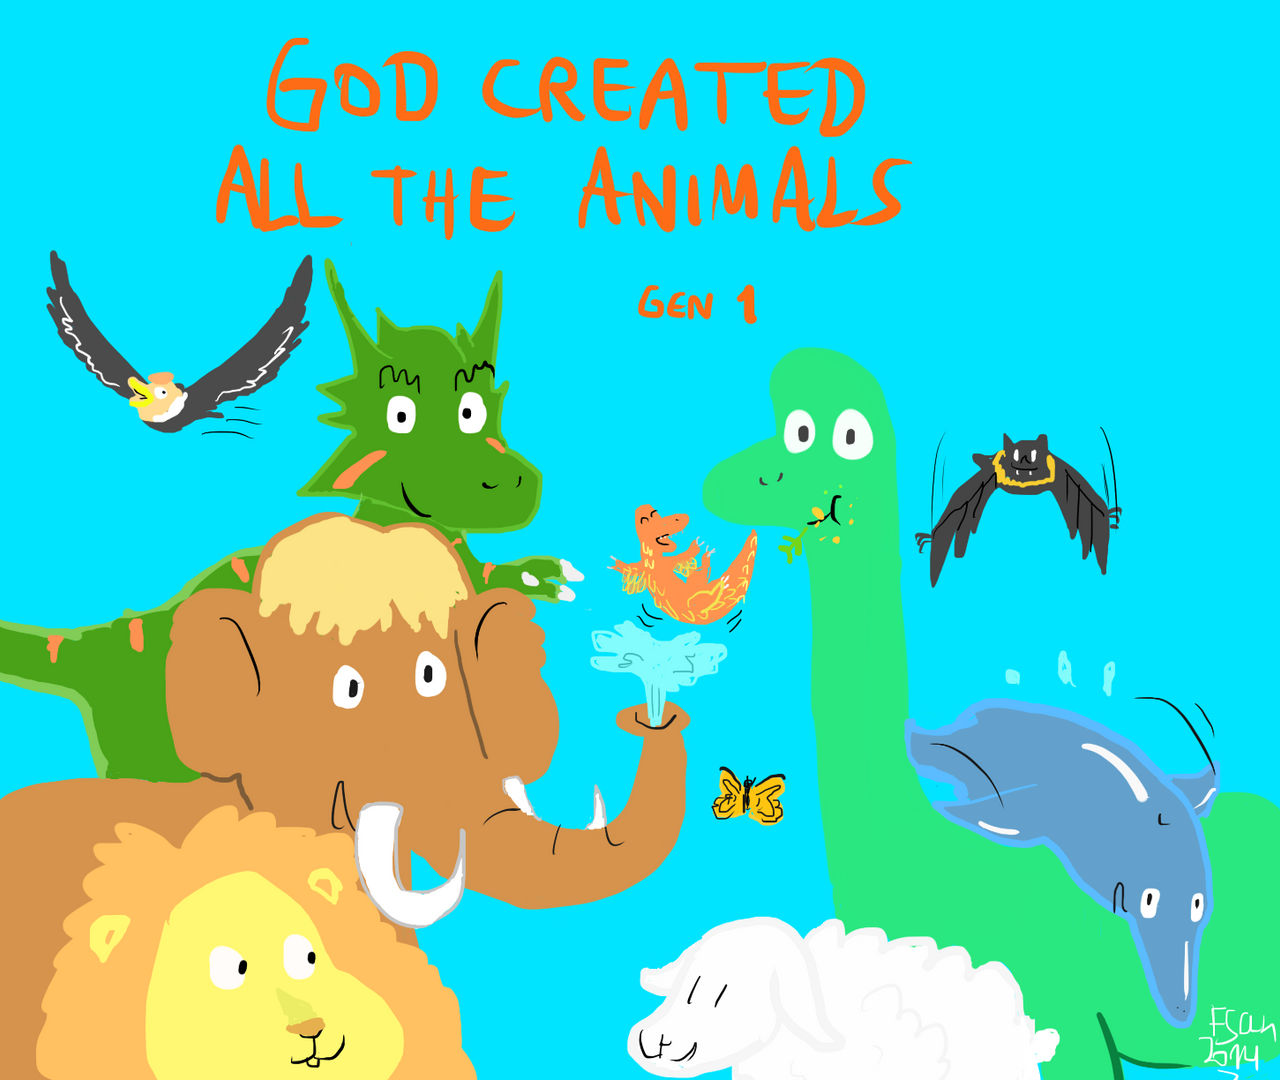 God created all the animals by SandovART on DeviantArt